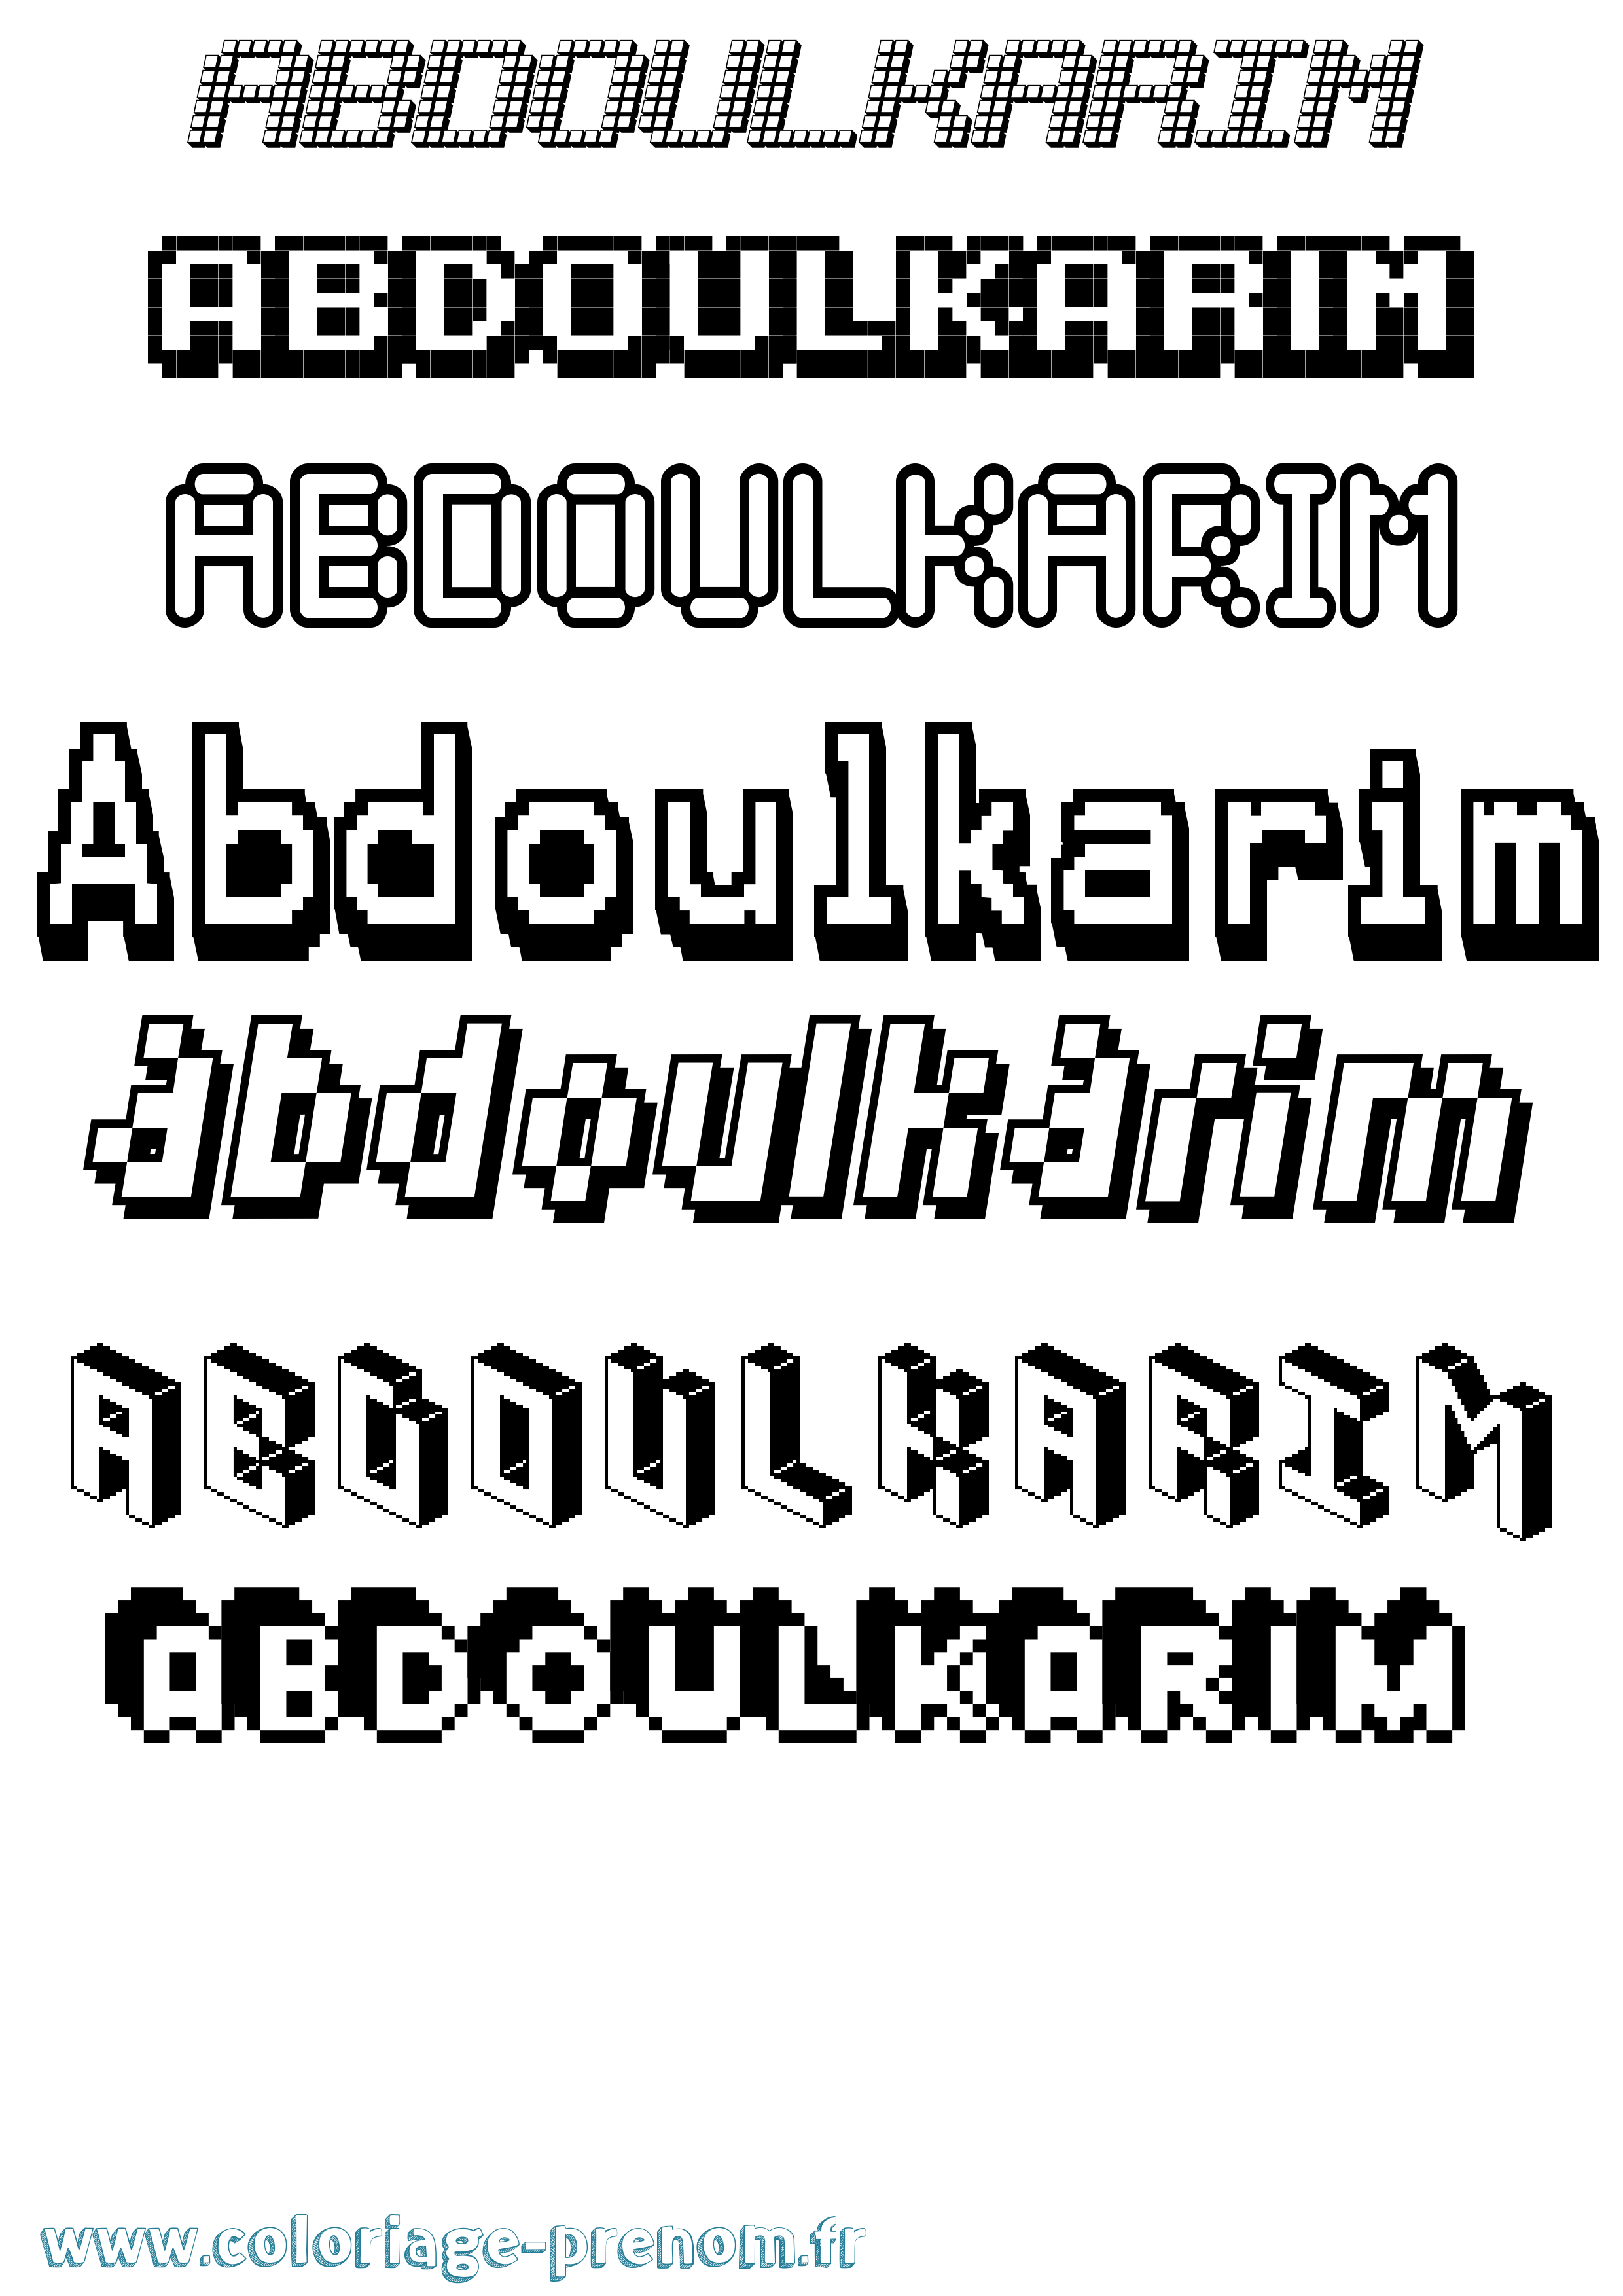 Coloriage prénom Abdoulkarim Pixel